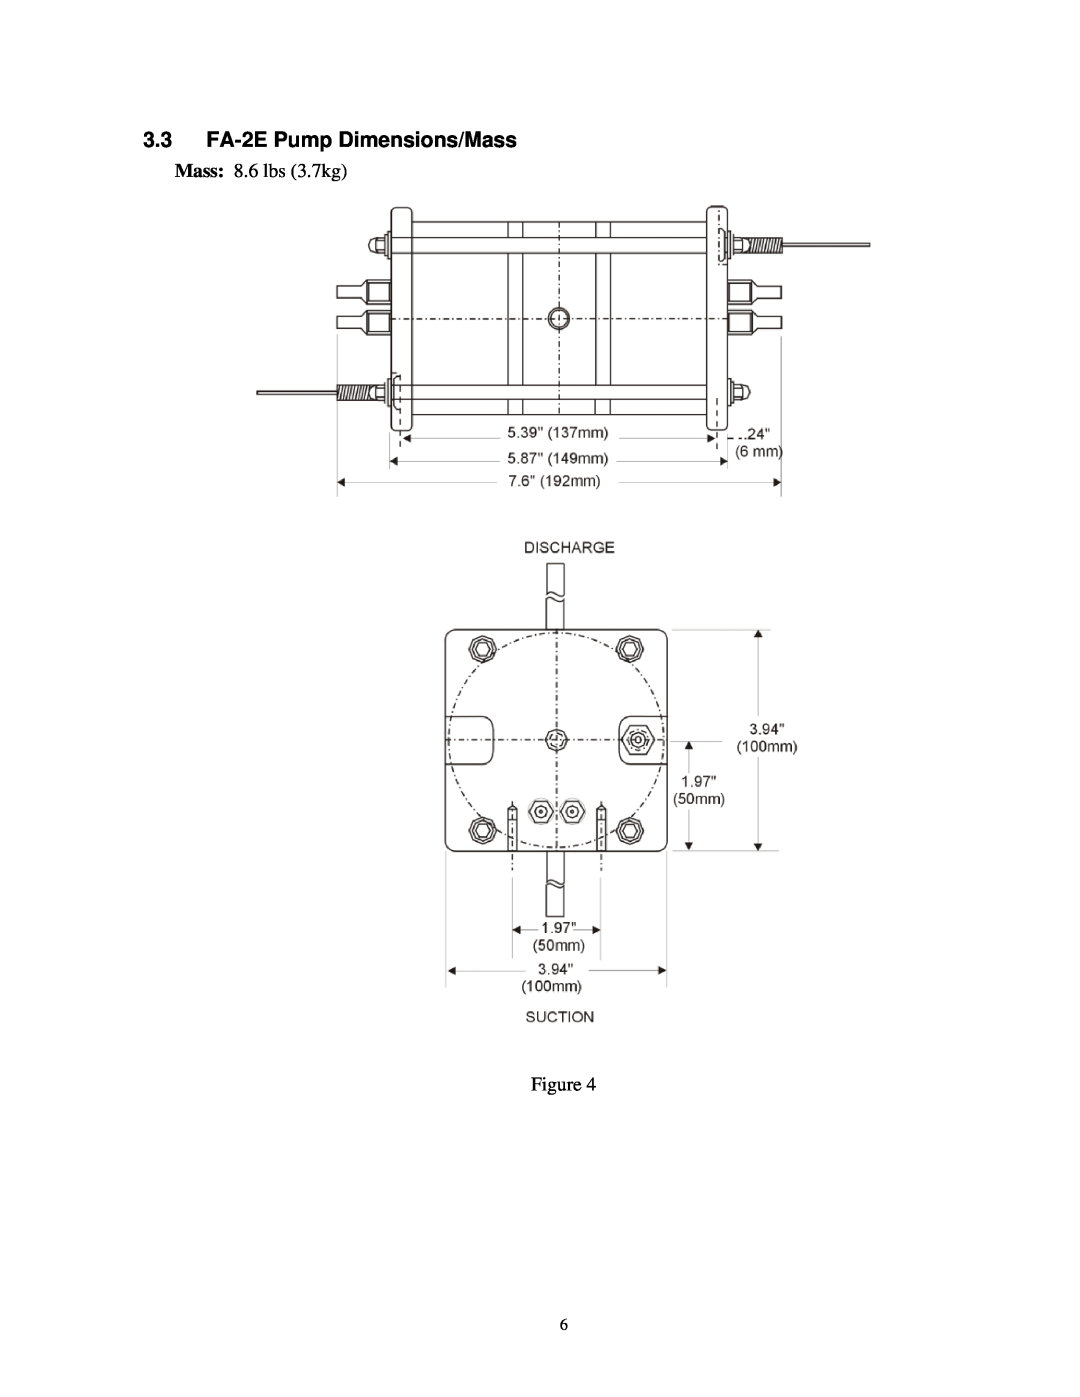 Raymarine instruction manual 3.3FA-2EPump Dimensions/Mass, Mass 8.6 lbs 3.7kg Figure 